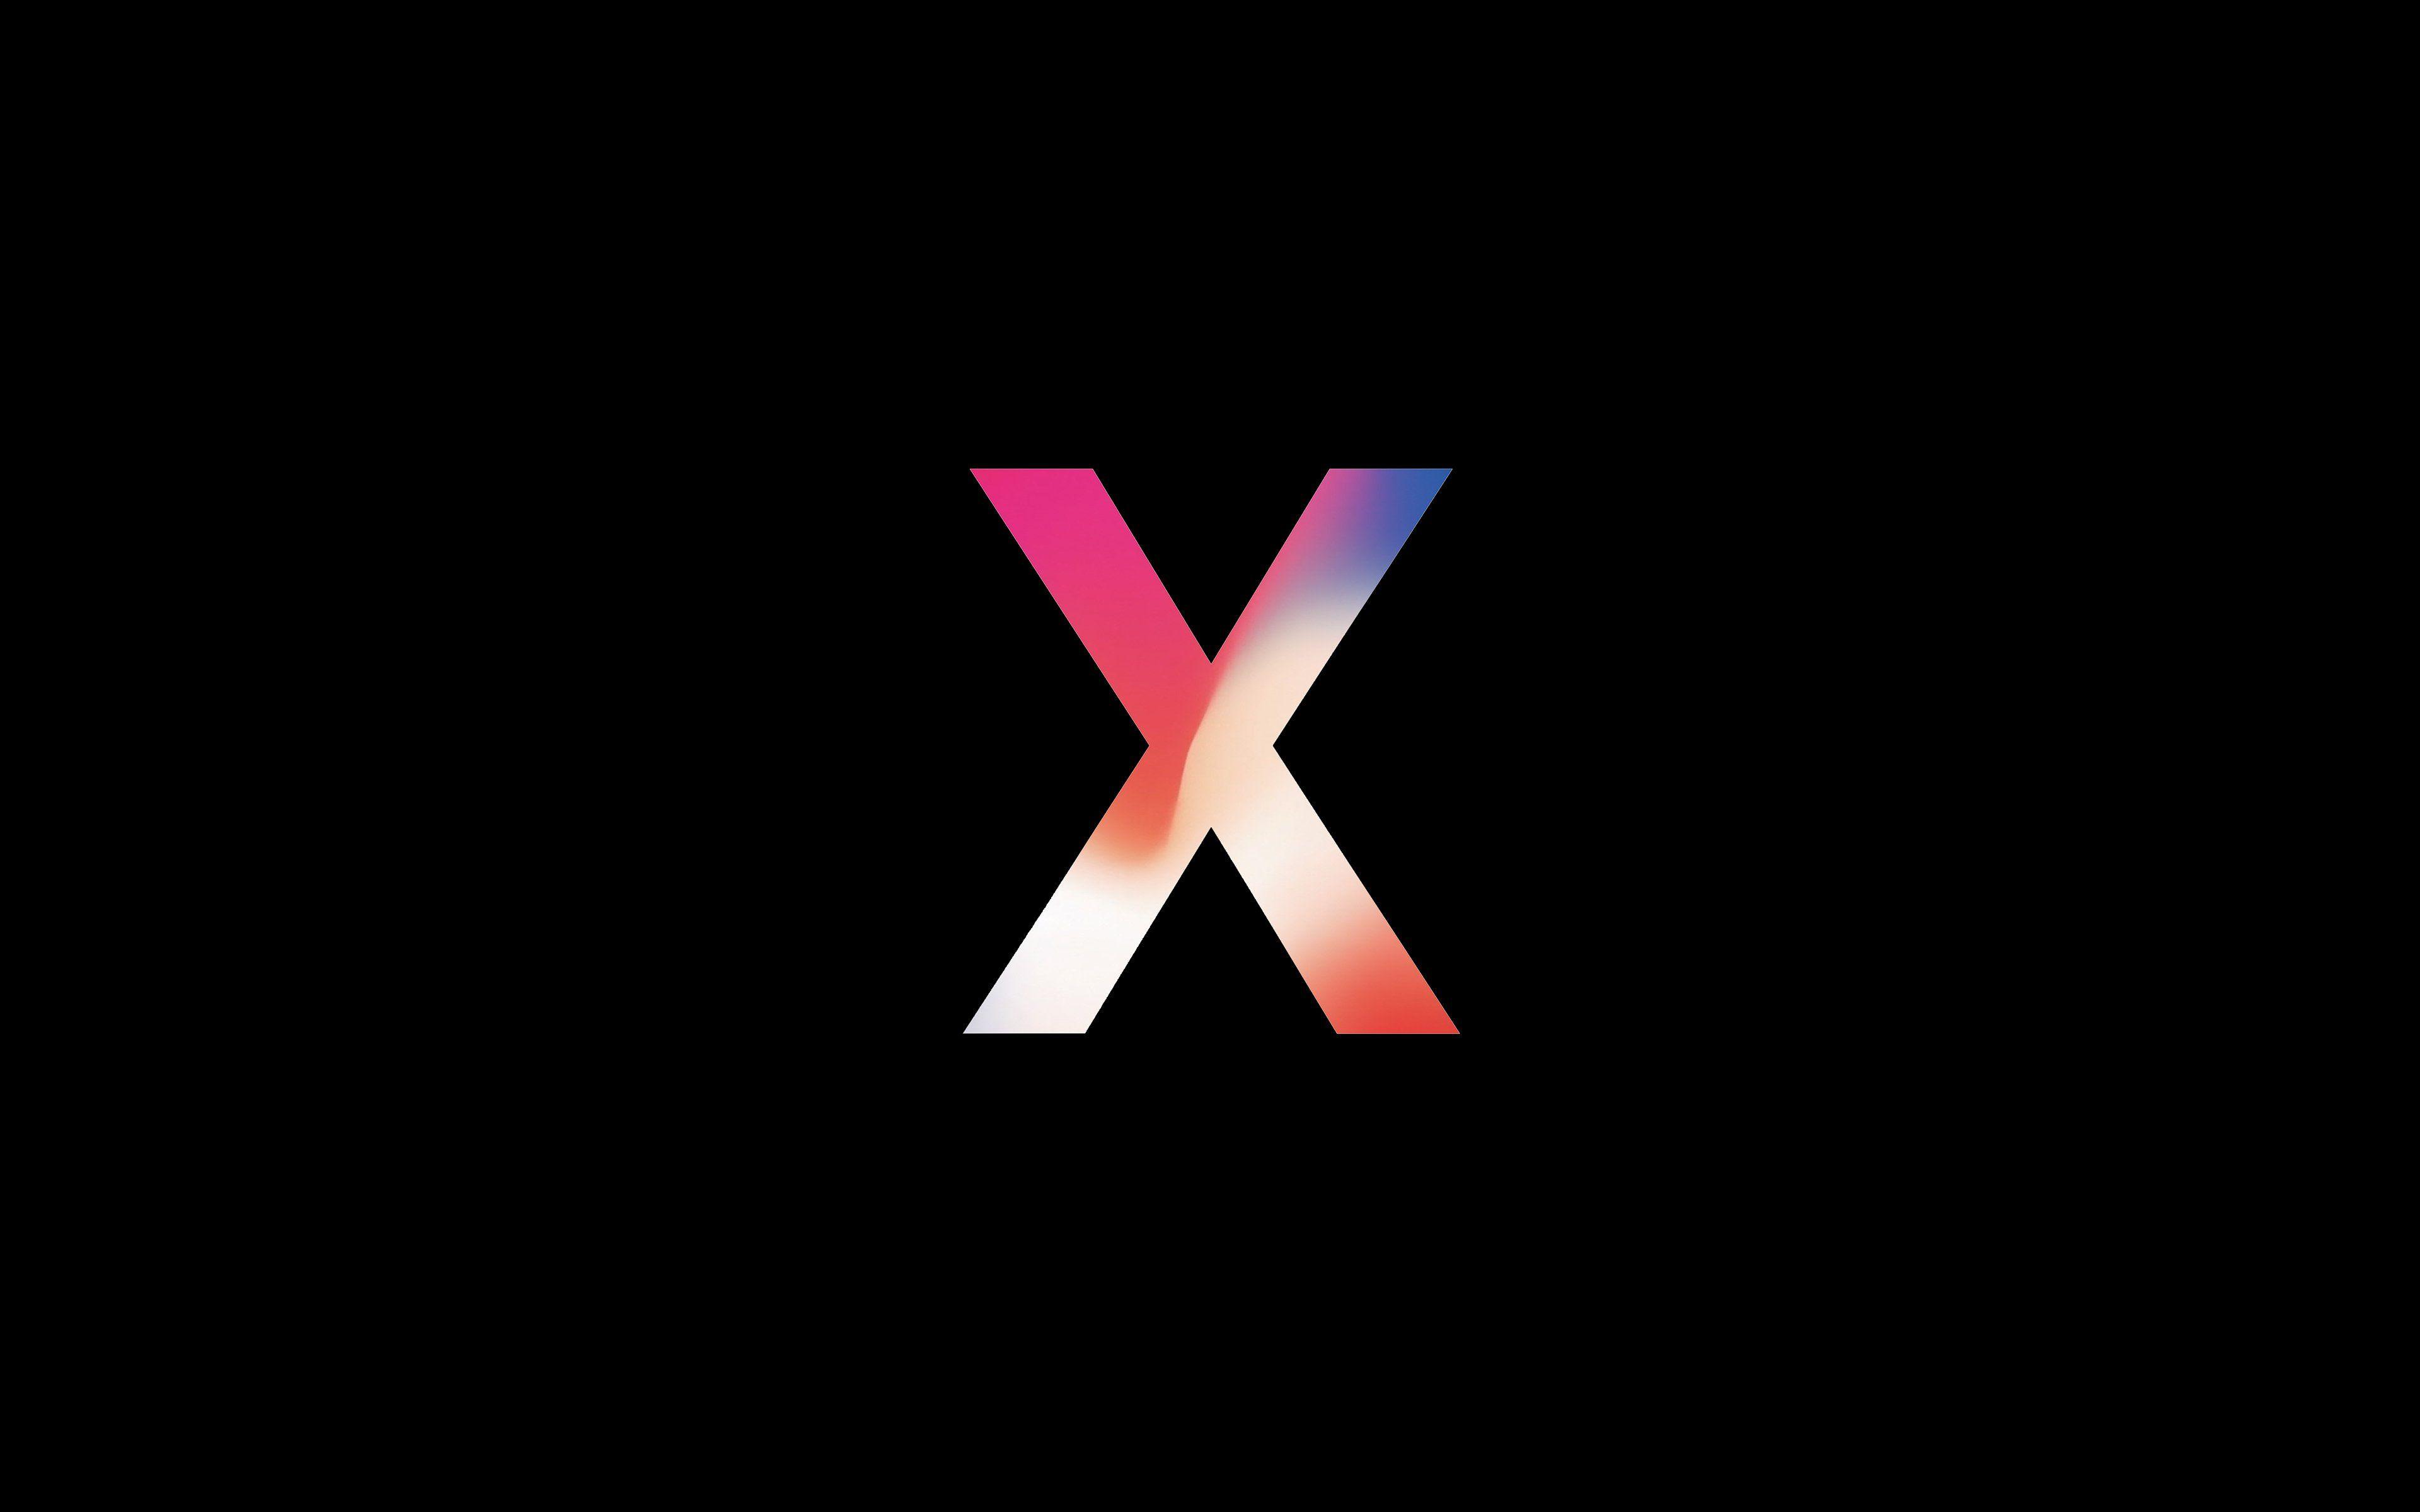 X. Логотип с буквой х. Логотип на черном фоне. Буква х на черном фоне. Икс на черном фоне.